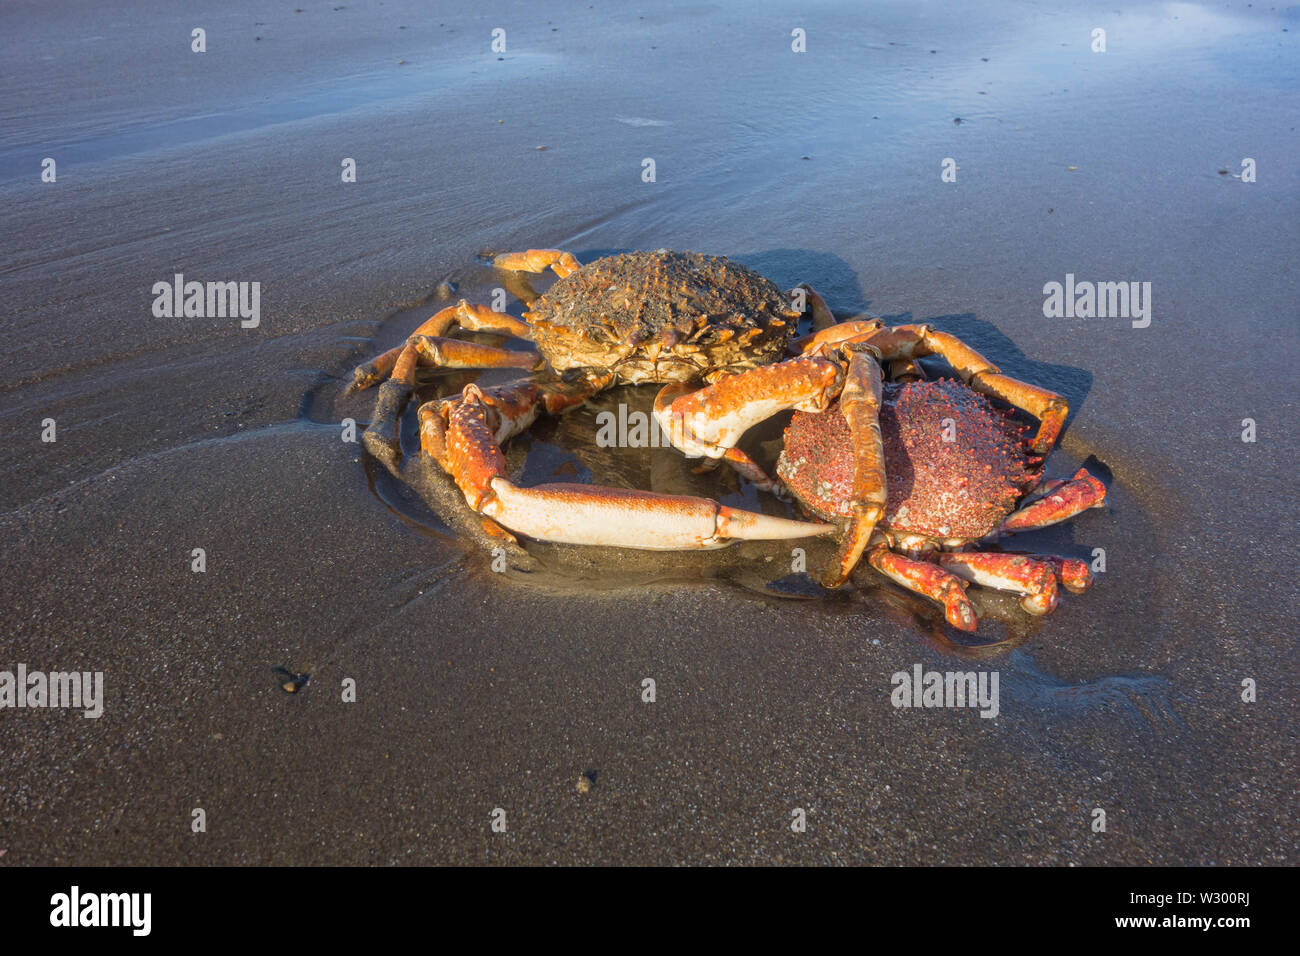 Spider crabs (Maja brachydactyla) in water pool, Yayslas beach Borth Ceredigion, Mid Wales, UK June 2019. Stock Photo